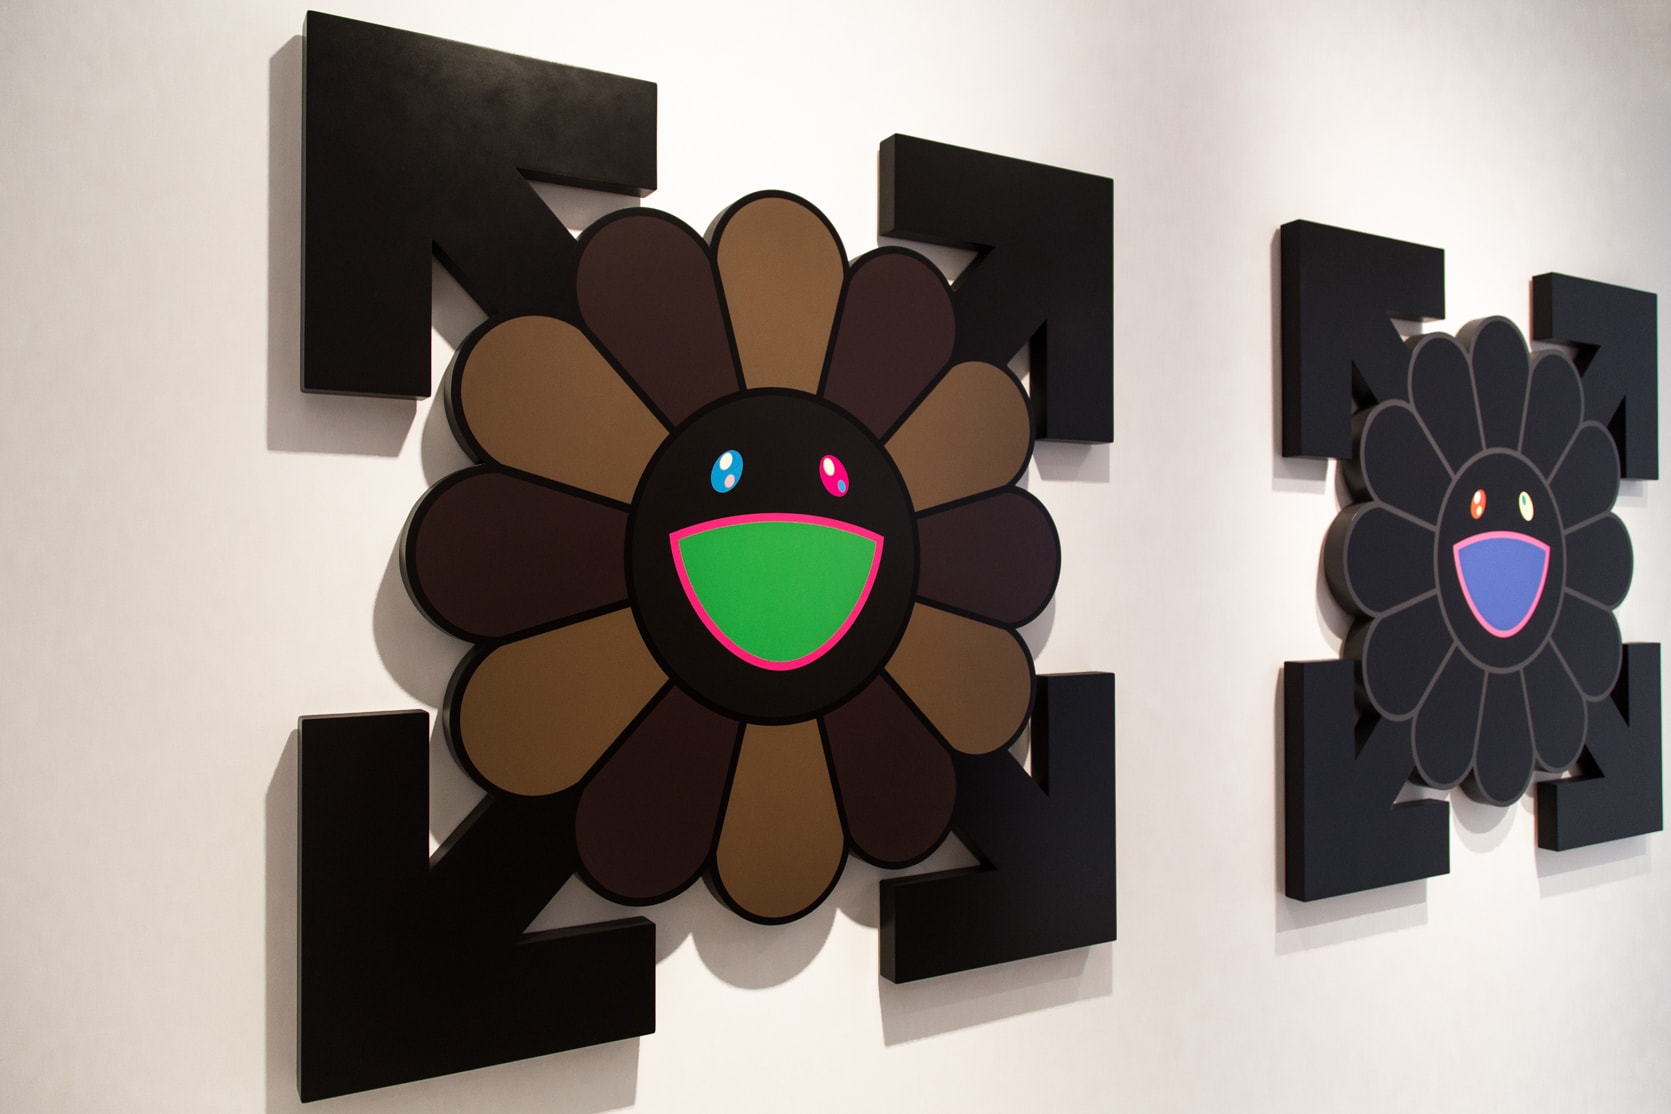 Virgil Abloh Takashi Murakami Future History Gagosian London Artwork Exhibit Exhibition art show